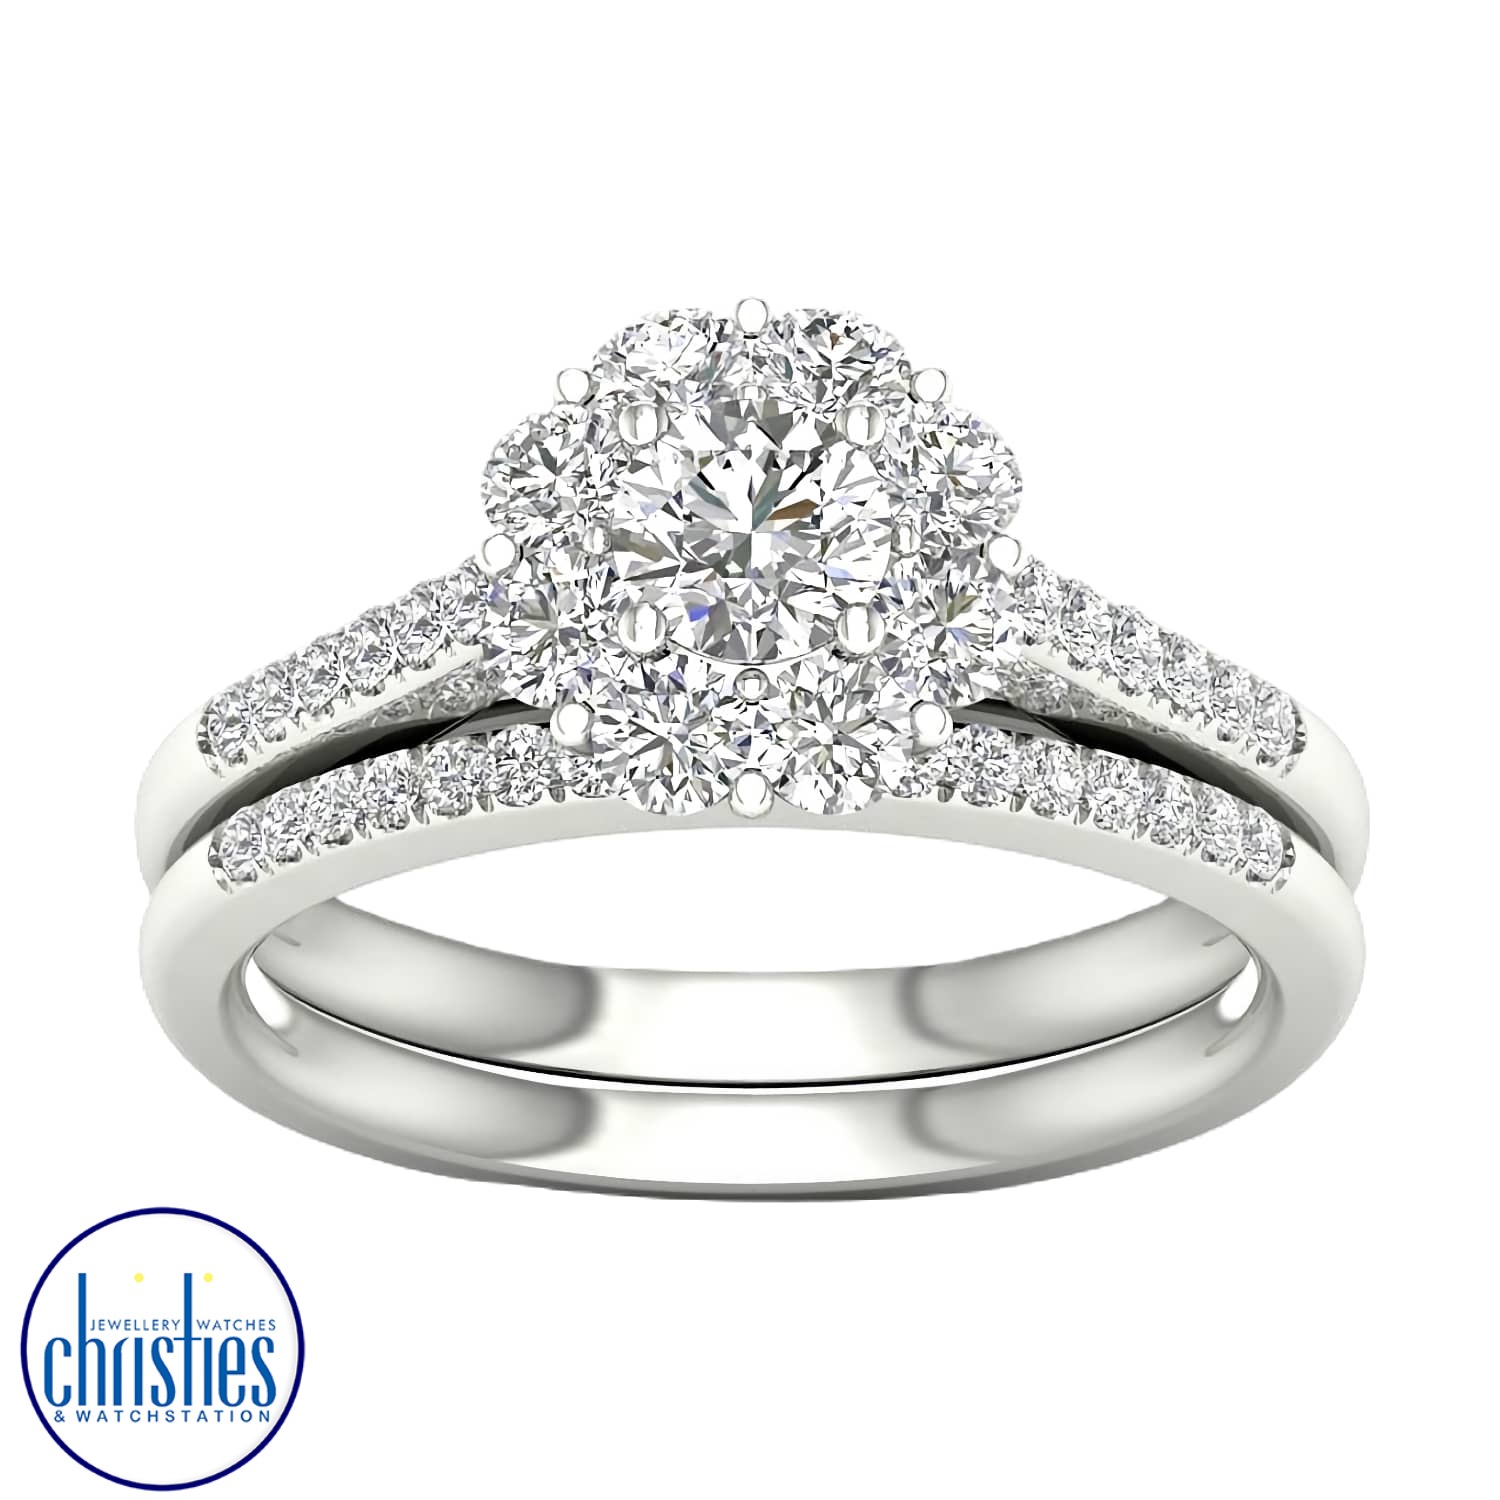 18ct White Gold Diamond Bridal Set 1.00ct TDW MSD0354.  Affordable Engagement Rings Nz $5,995.00